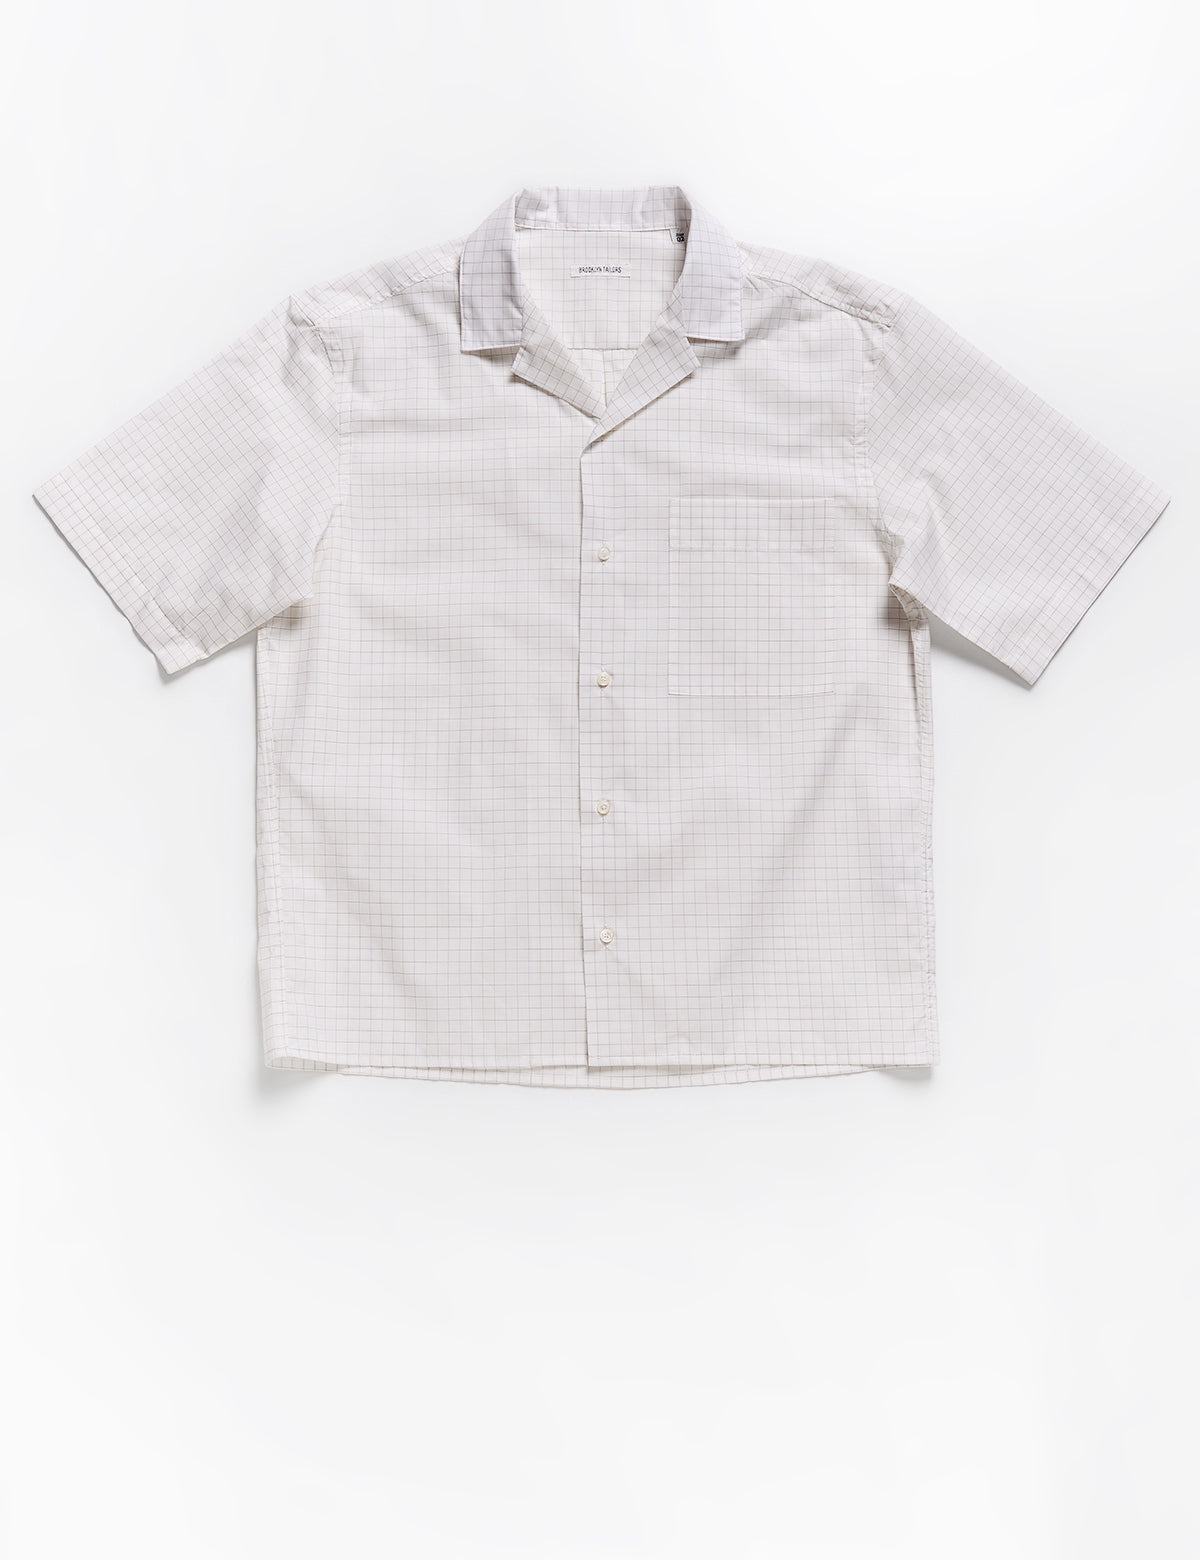 Brooklyn Tailors BKT18 Camp Shirt in Cotton Silk Graph Check - Natural full length flat shot